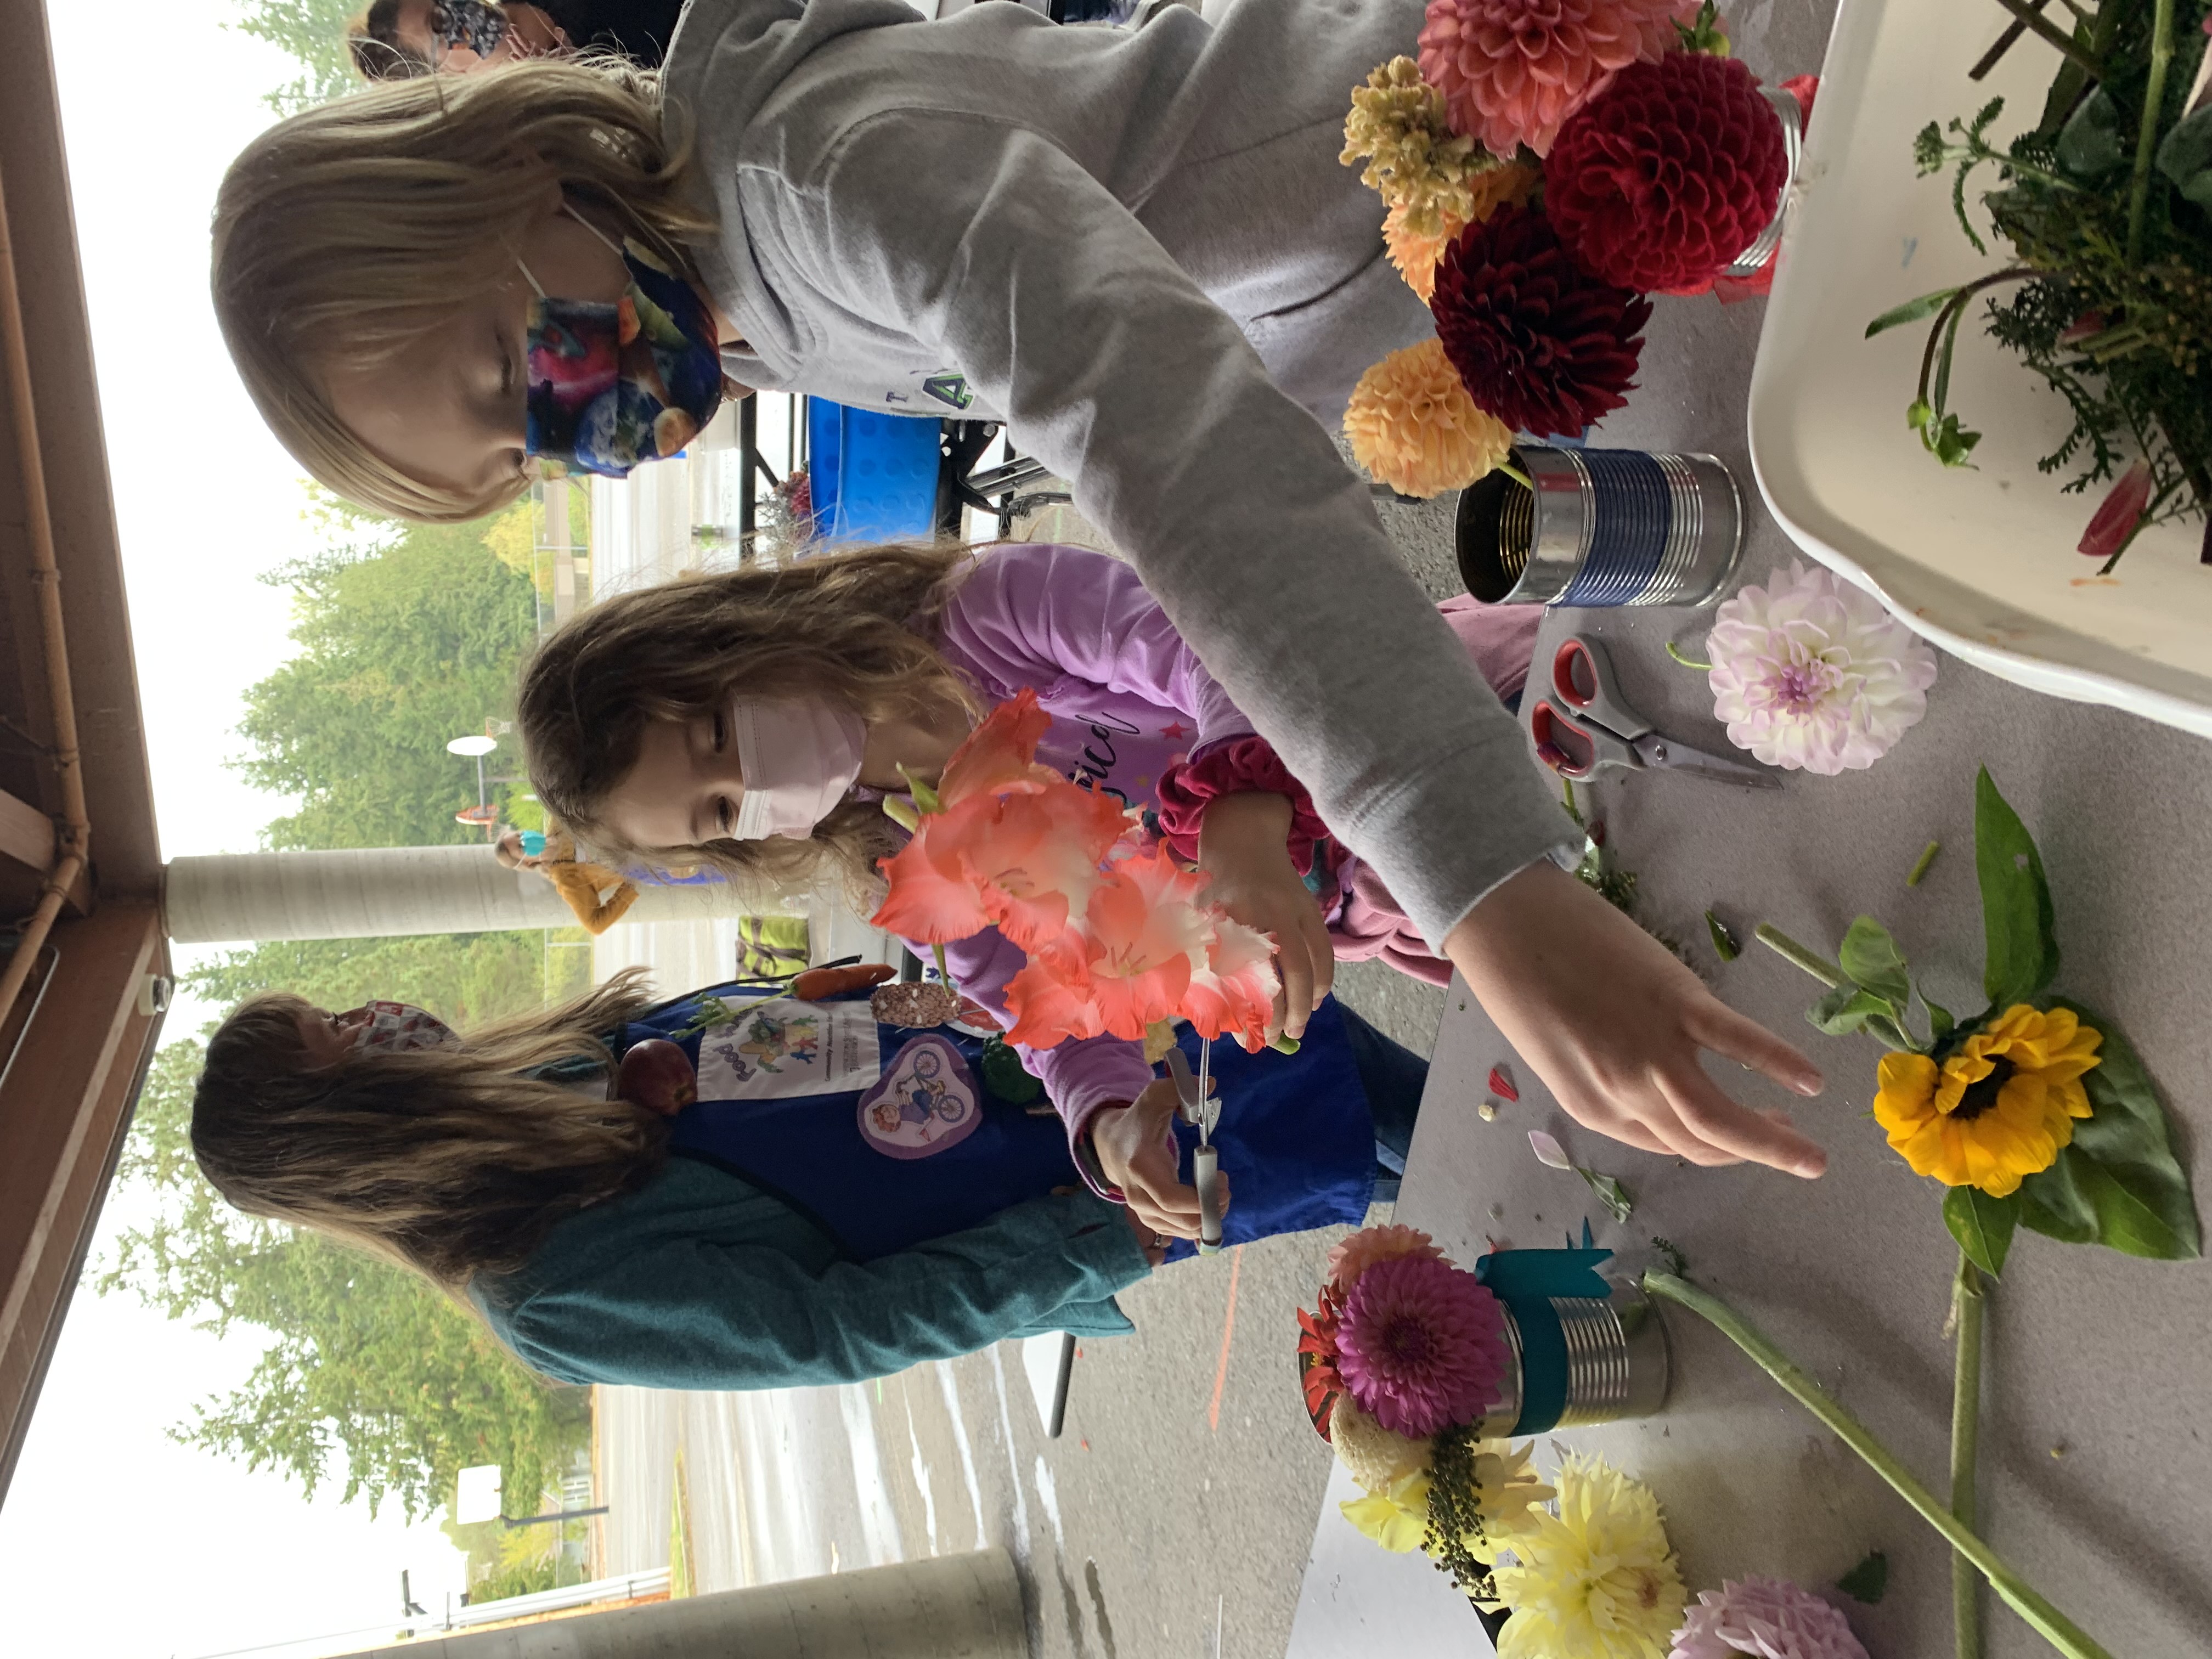 Students working on flower arrangements.